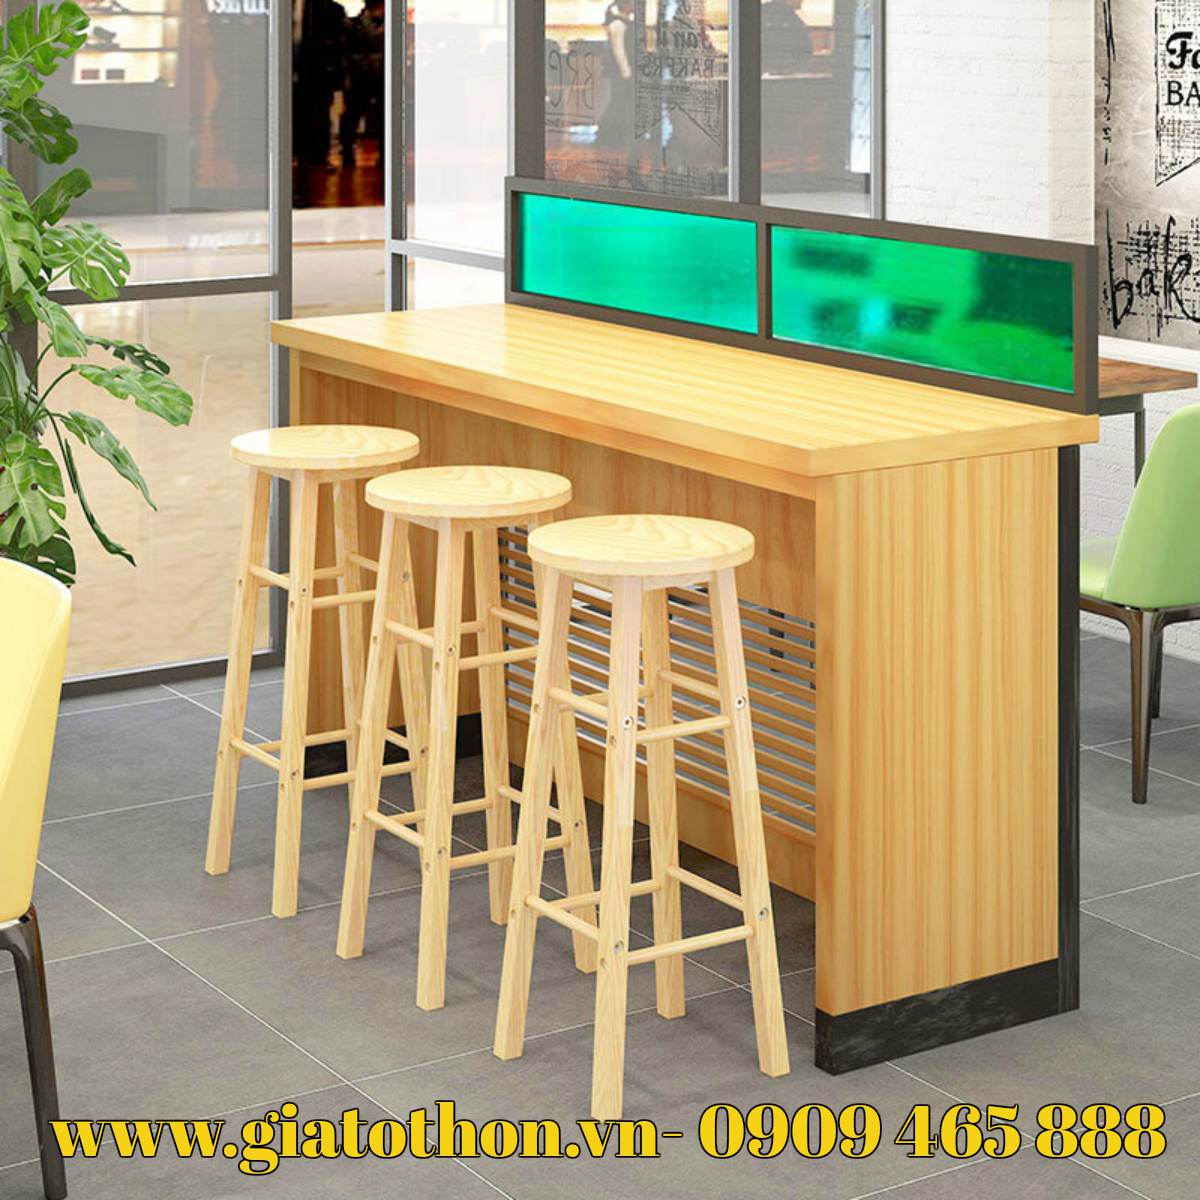 ghế gỗ quán bar đẹp, ghế bar gỗ hiện đại, ghế bar gỗ hcm, ghế quầy bar chân cao, ghế bar gỗ, ghế bar nhà hàng,